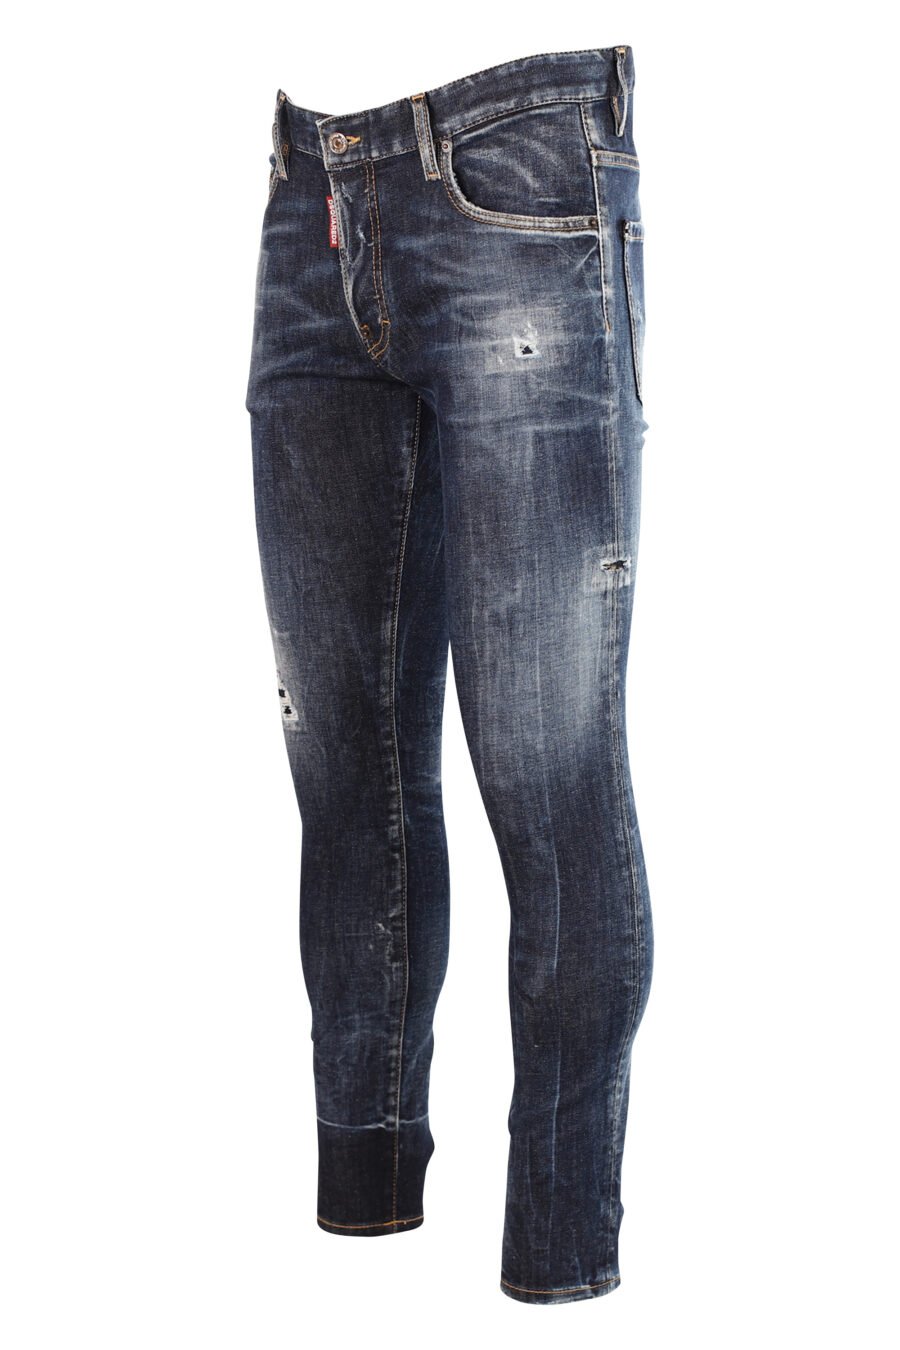 Jeans "super twinkey jean" blau mit Rissen - 8052134966914 2